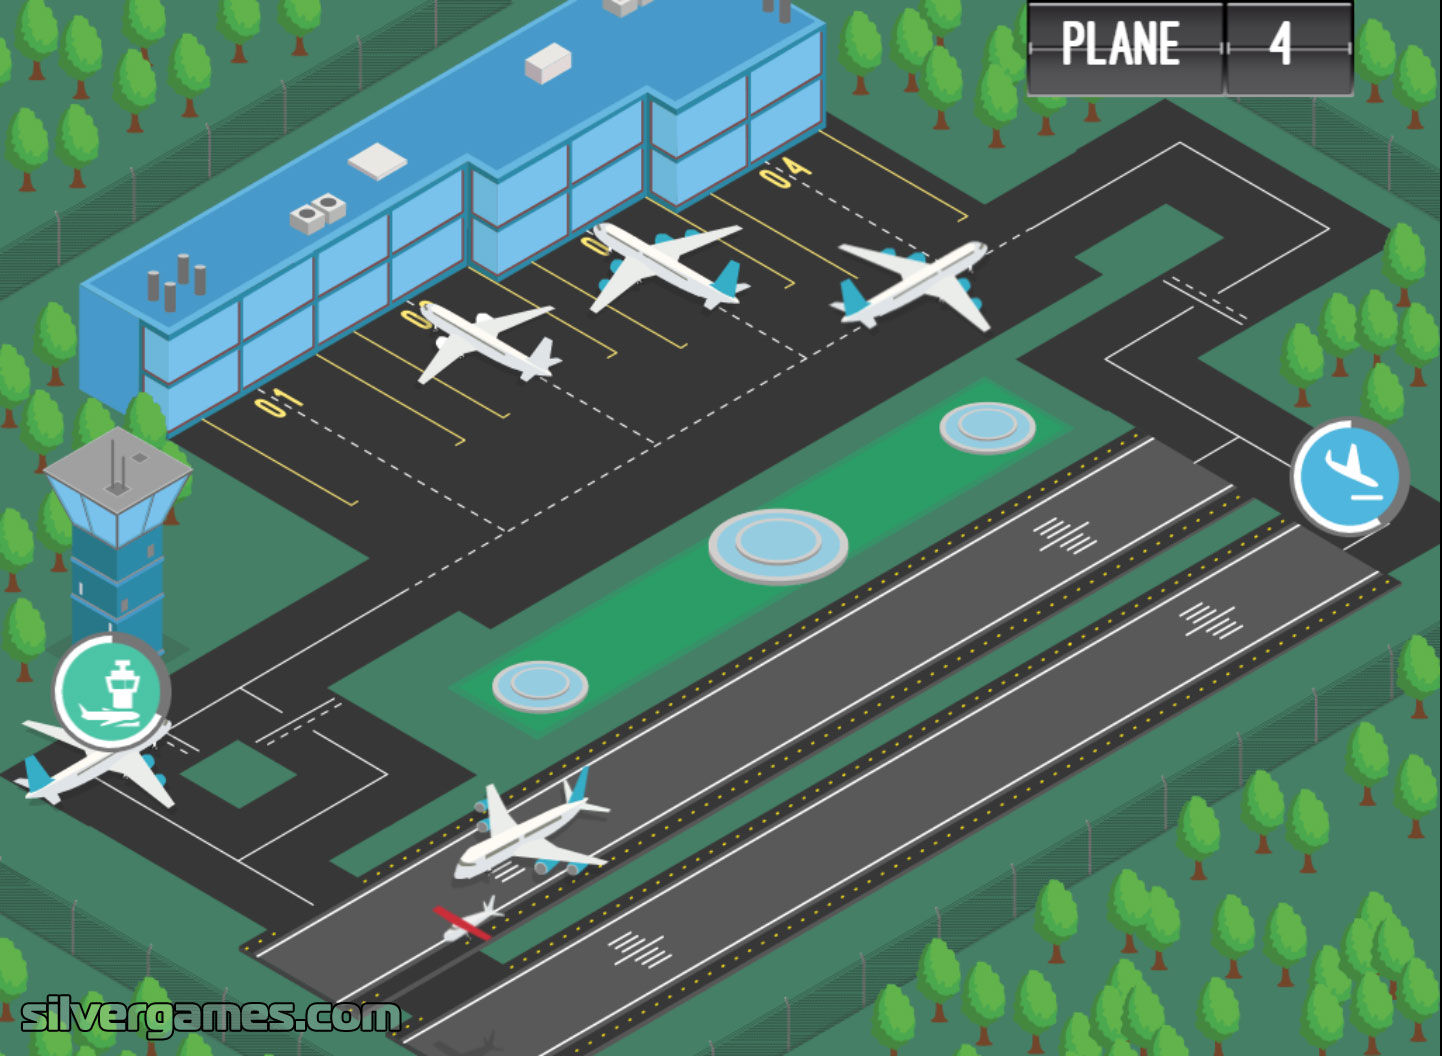 Airport Rush - Click Jogos